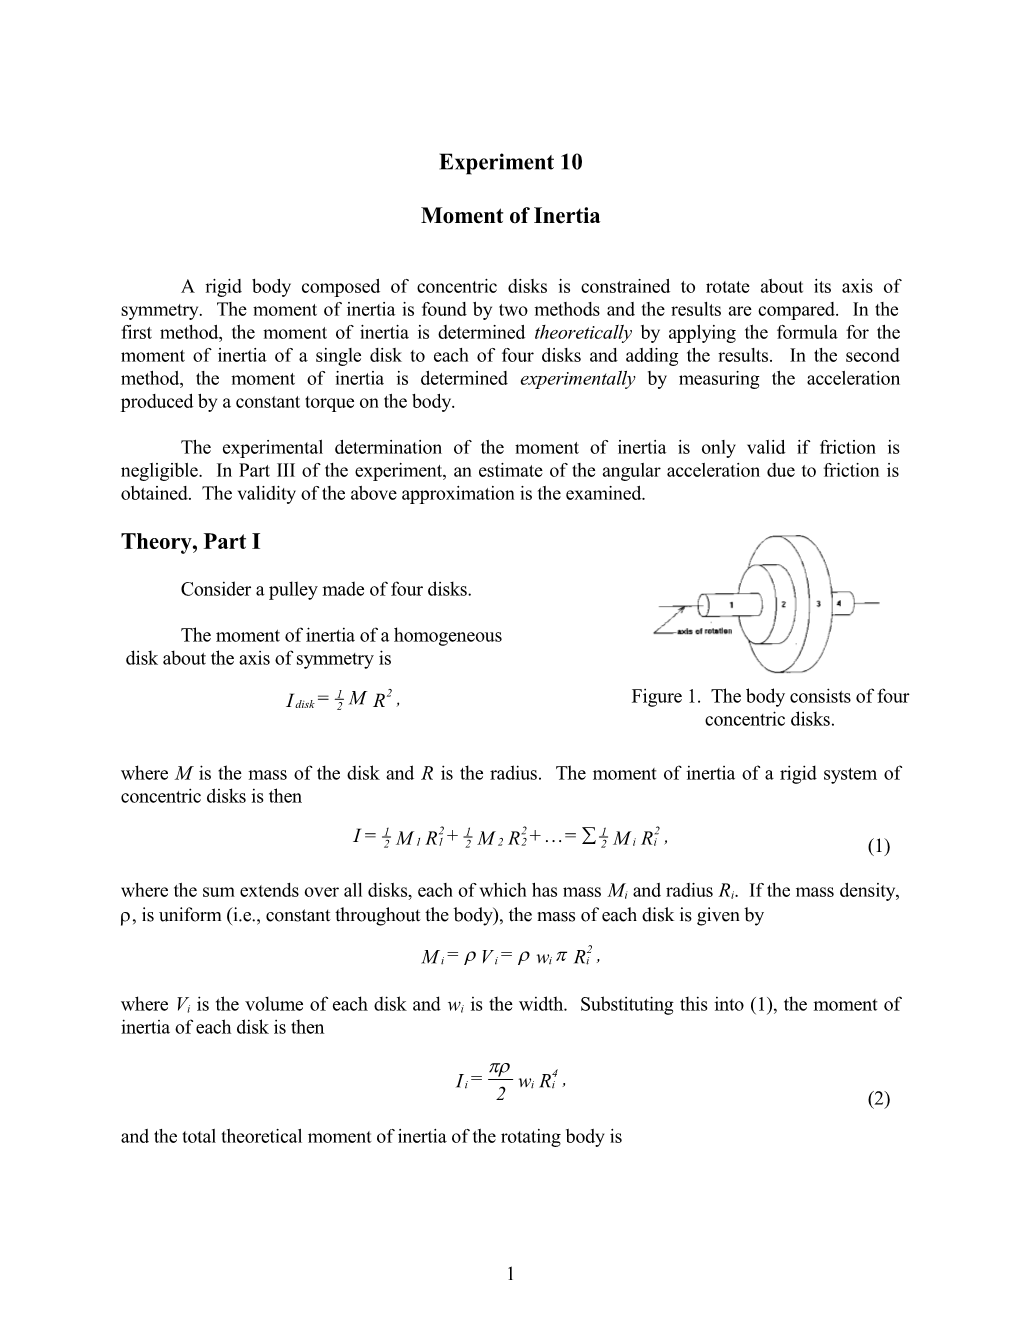 Phys 21 Rotational Inertia and Torque